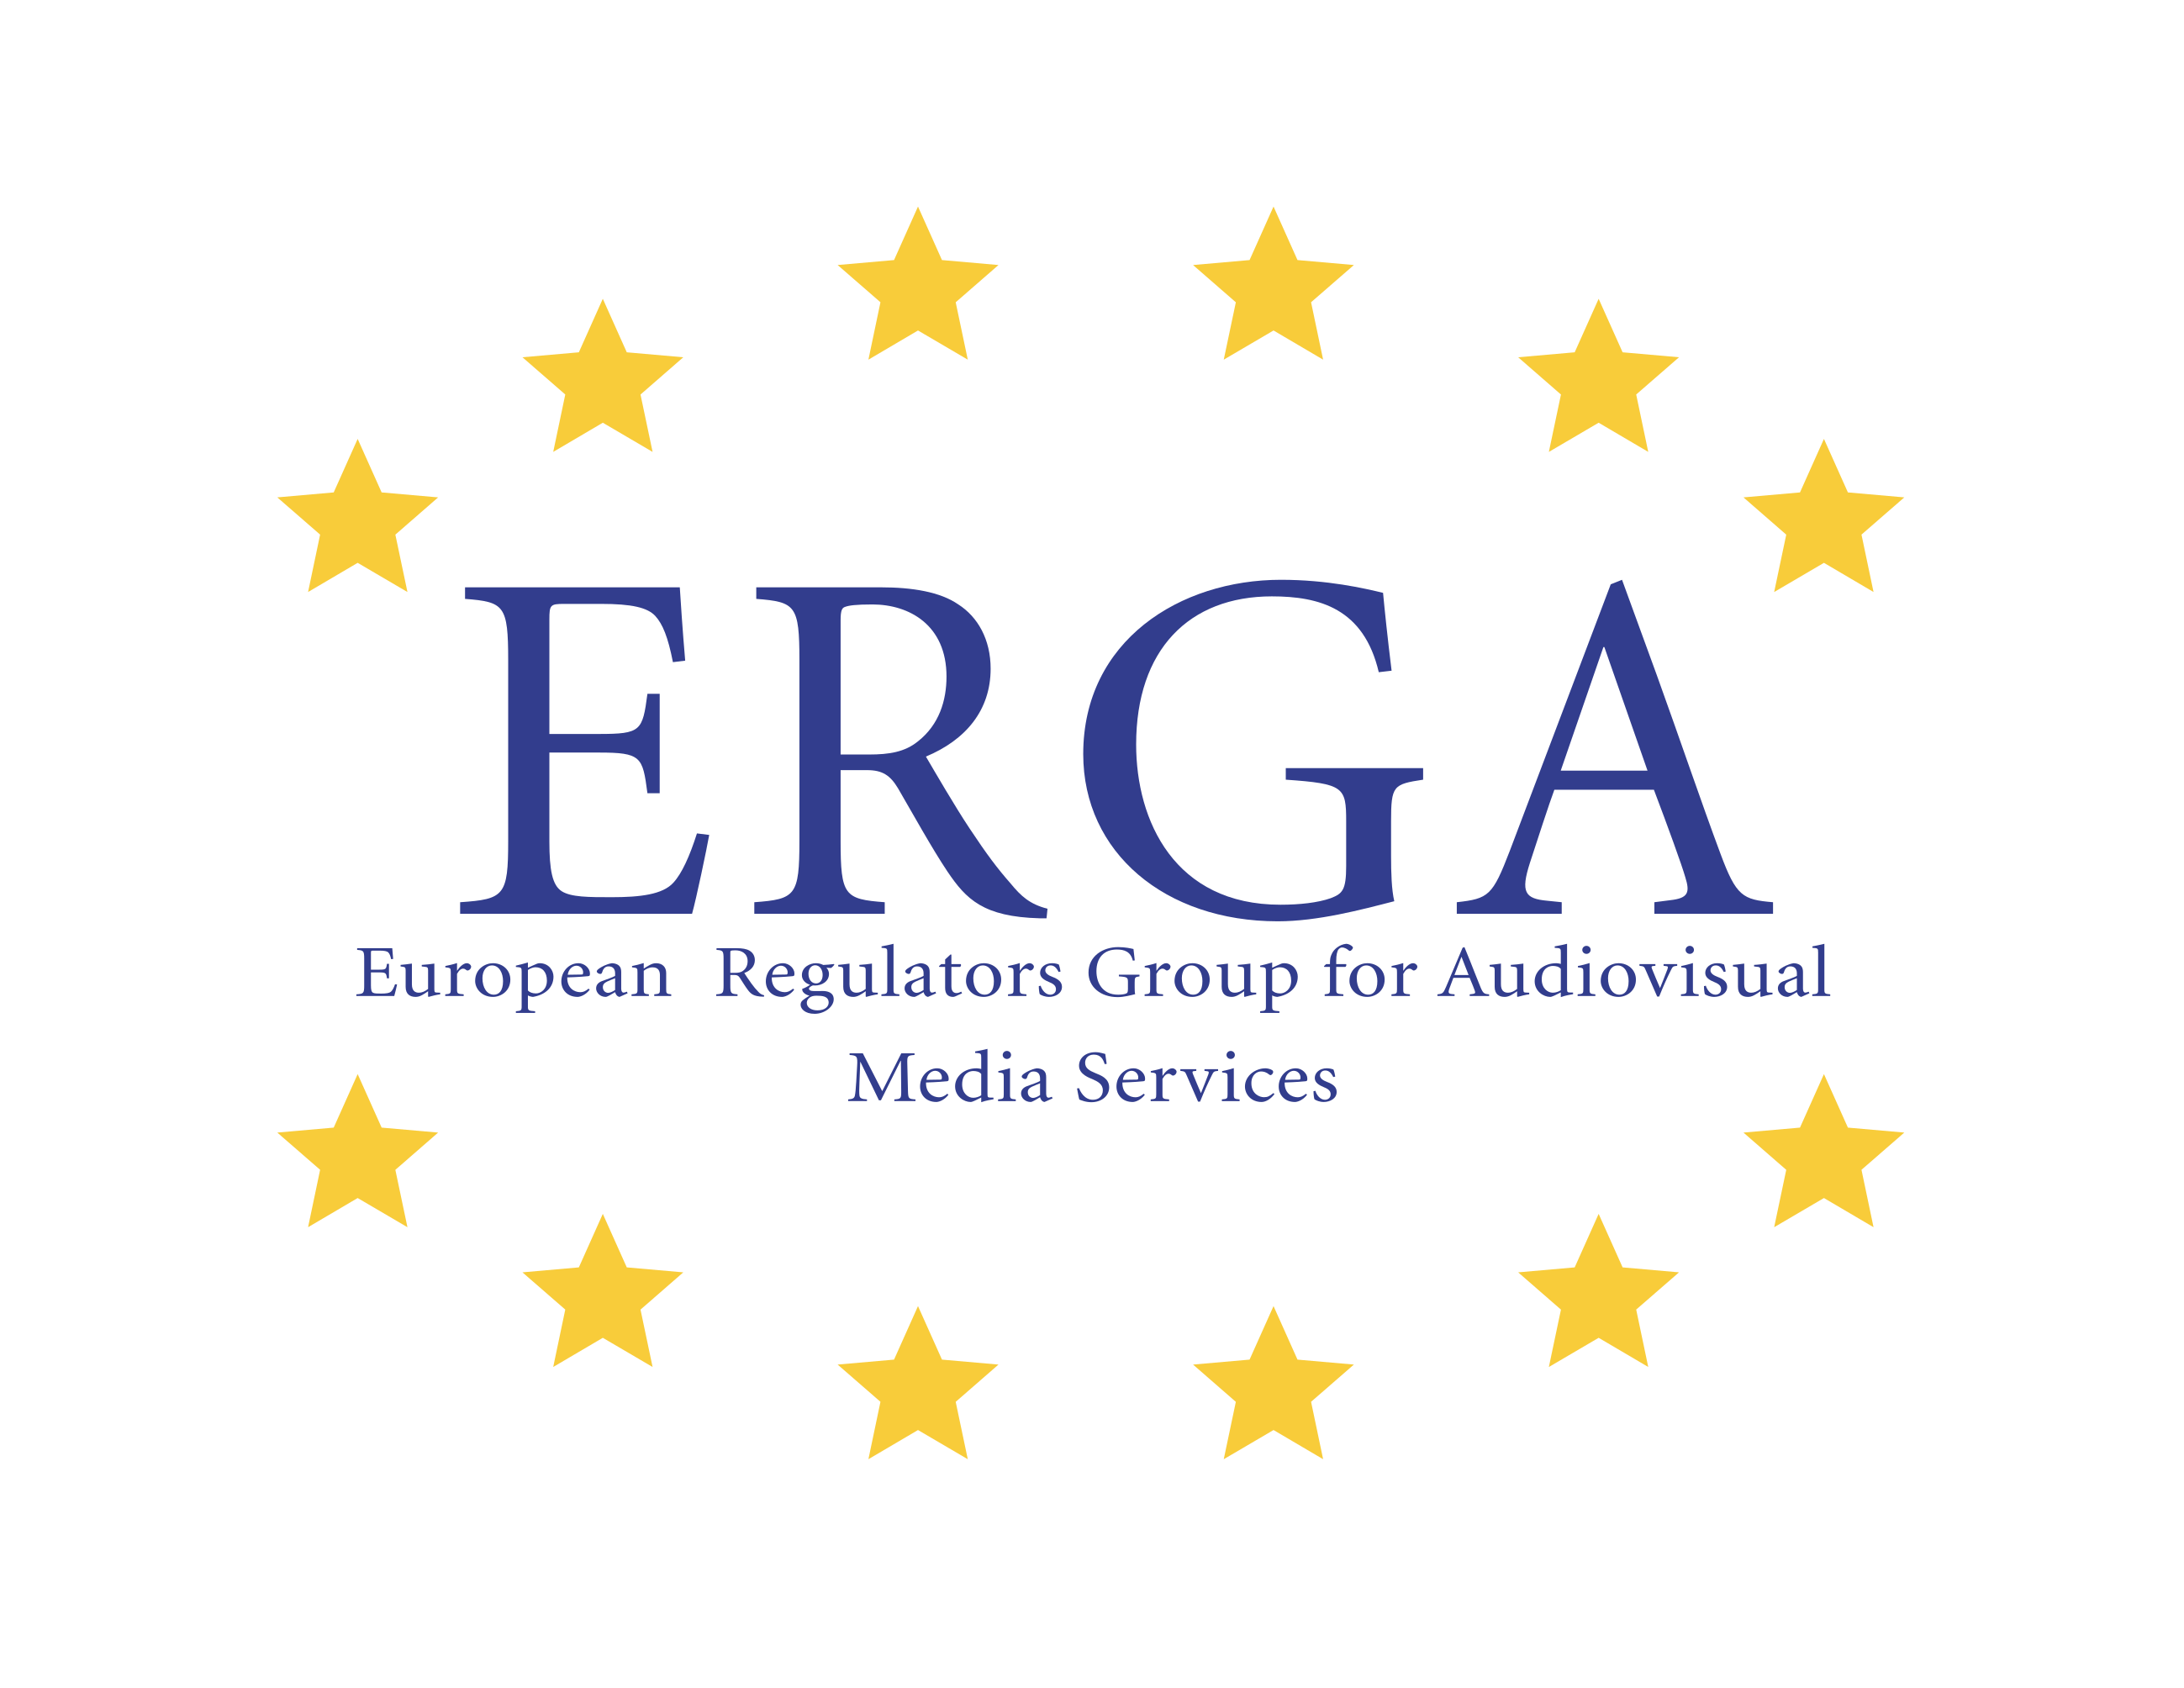 The image shows the logo of ERGA